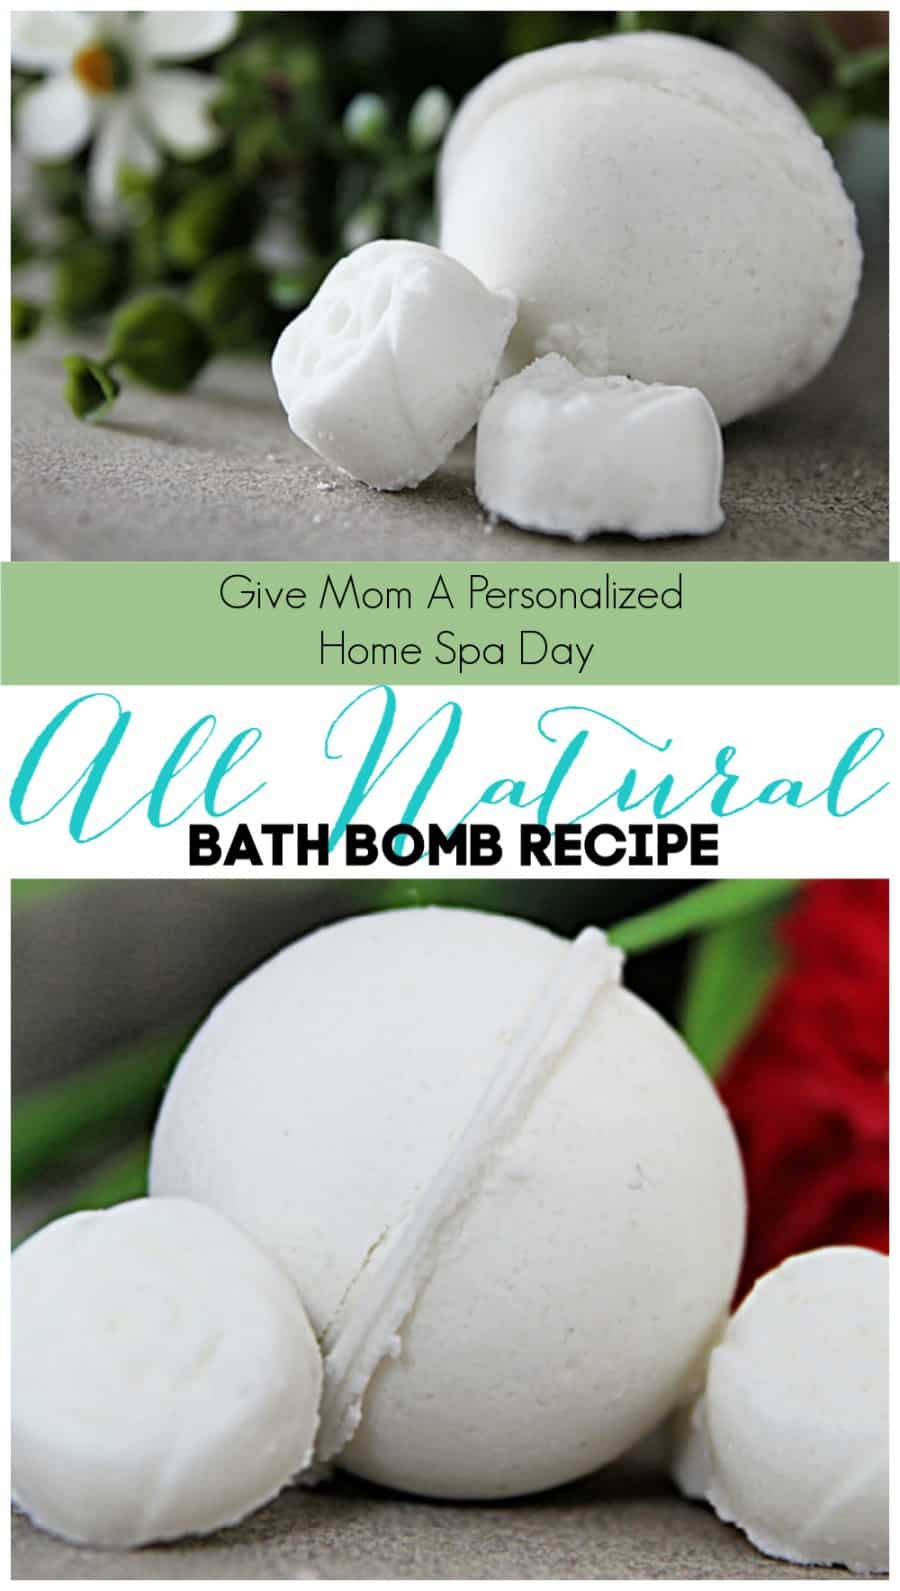 All Natural Homemade Bath Bomb Recipe